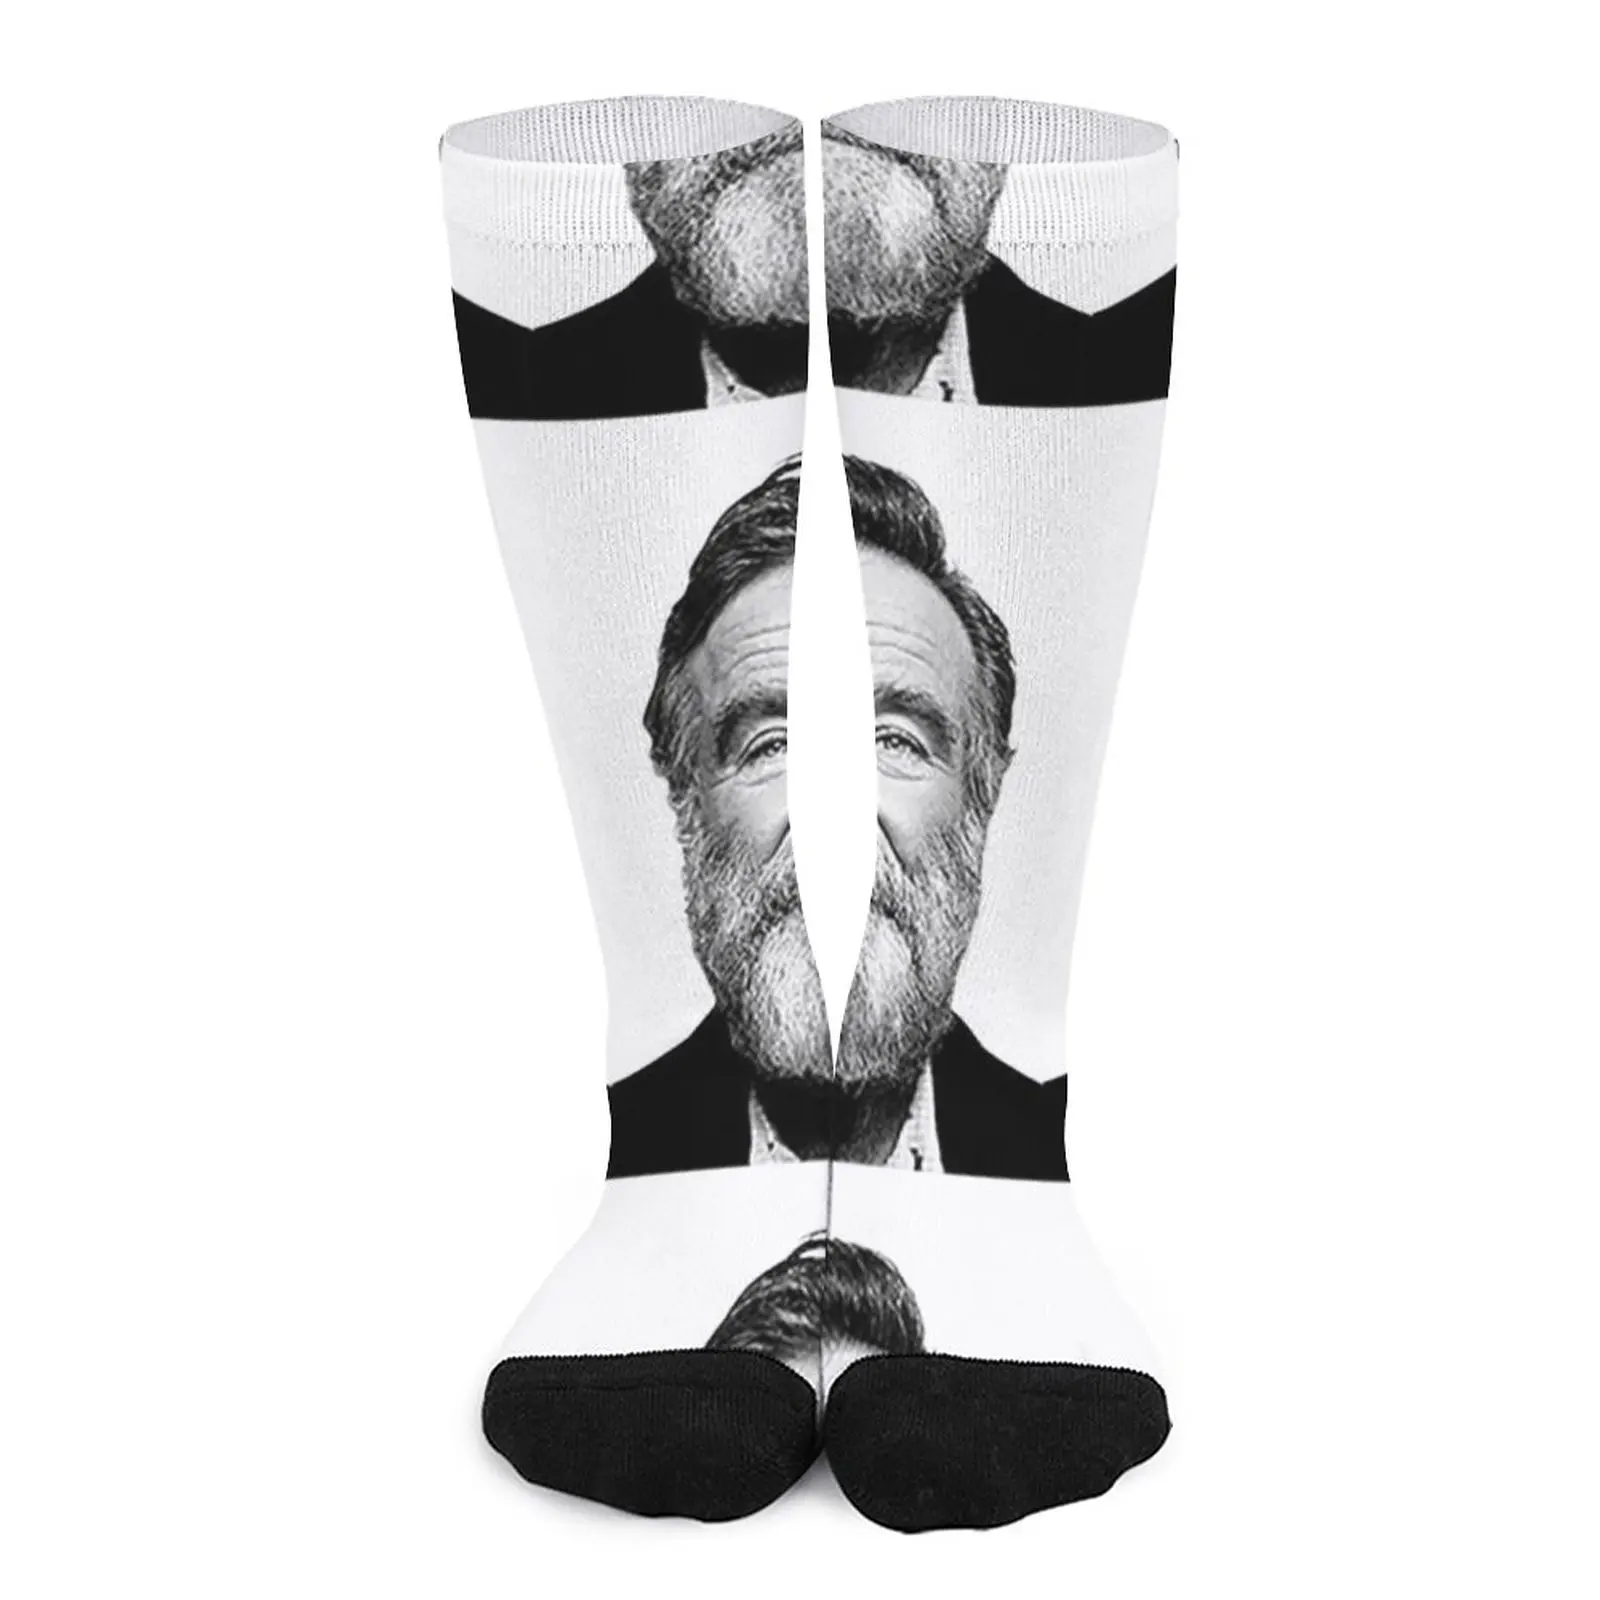 Robin Williams Socks Men's winter socks men socks winter socks men Stockings compression baroque academie williams christie le jardin des voix